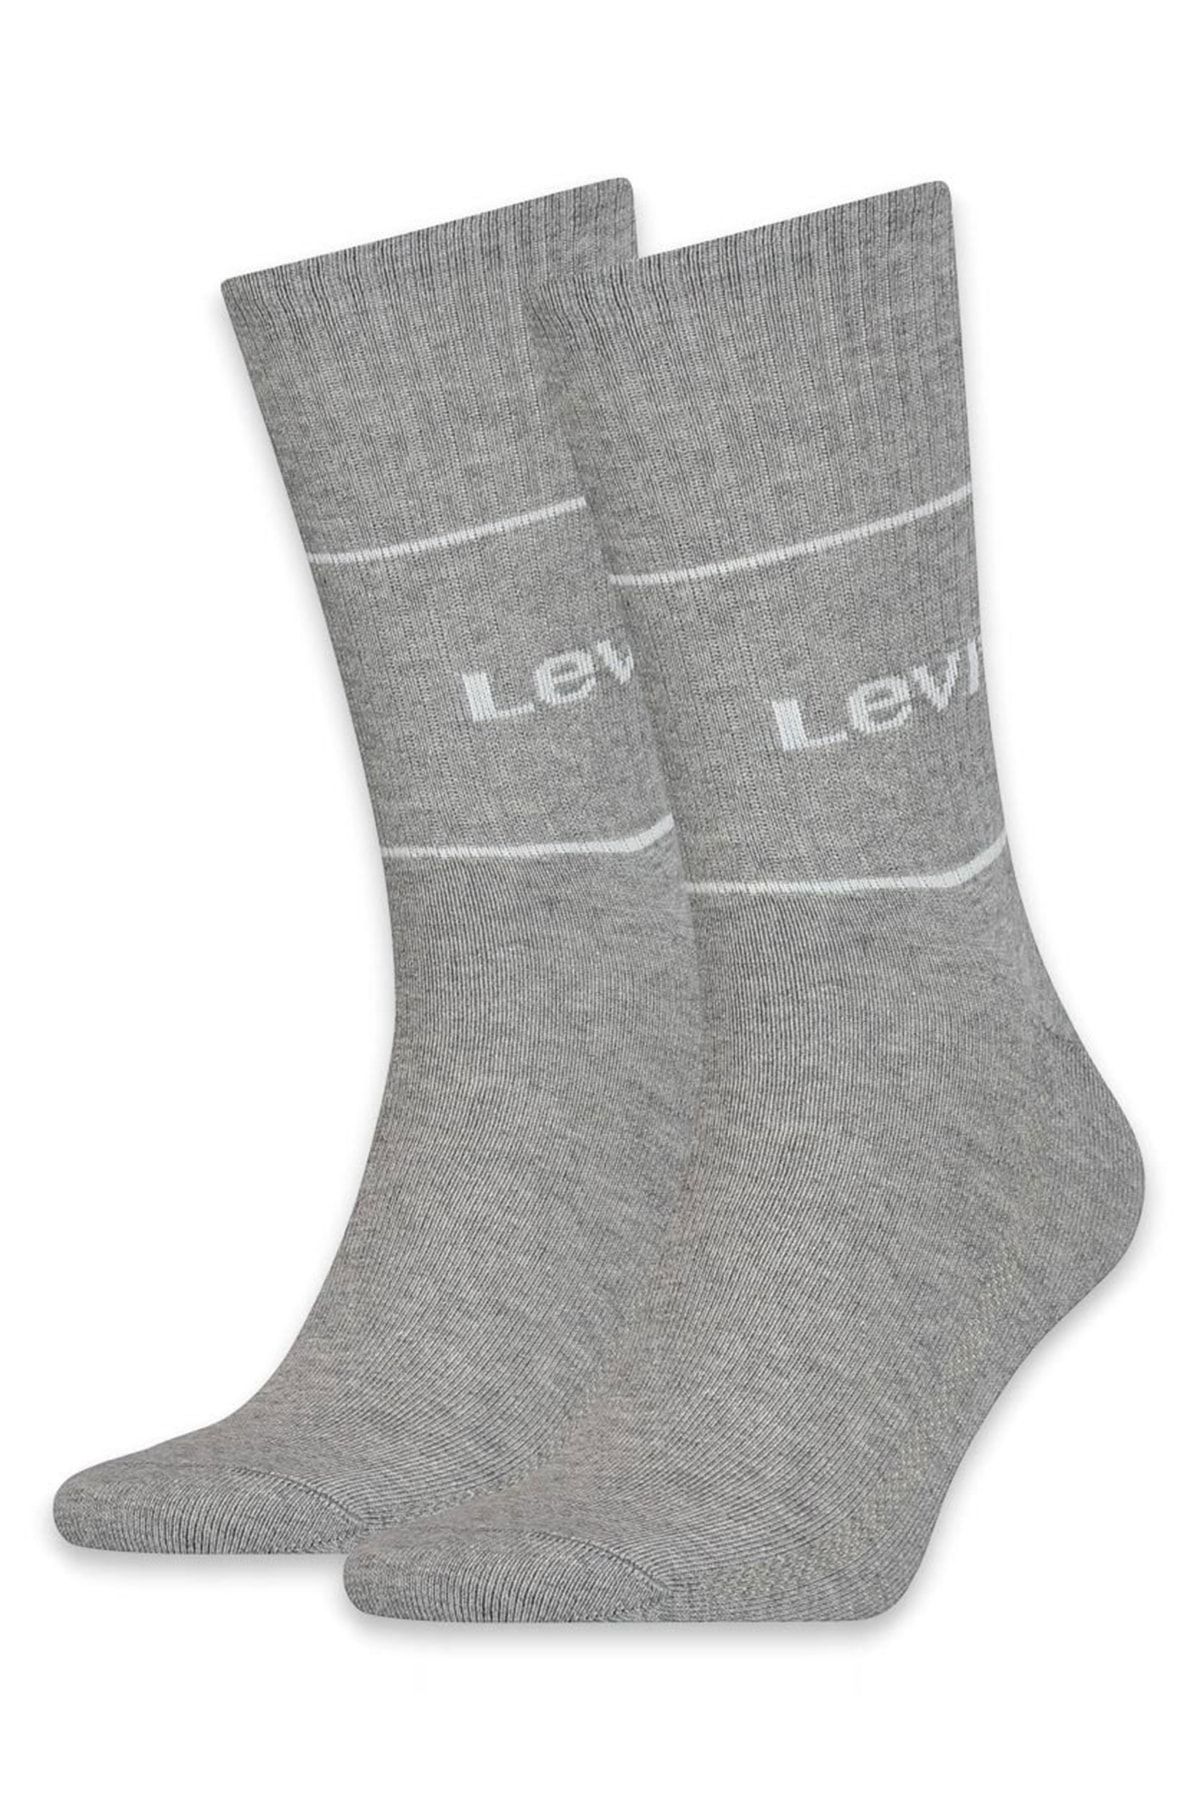 Levi's Pamuklu 2 Pack Çorap Erkek Çorap 37157